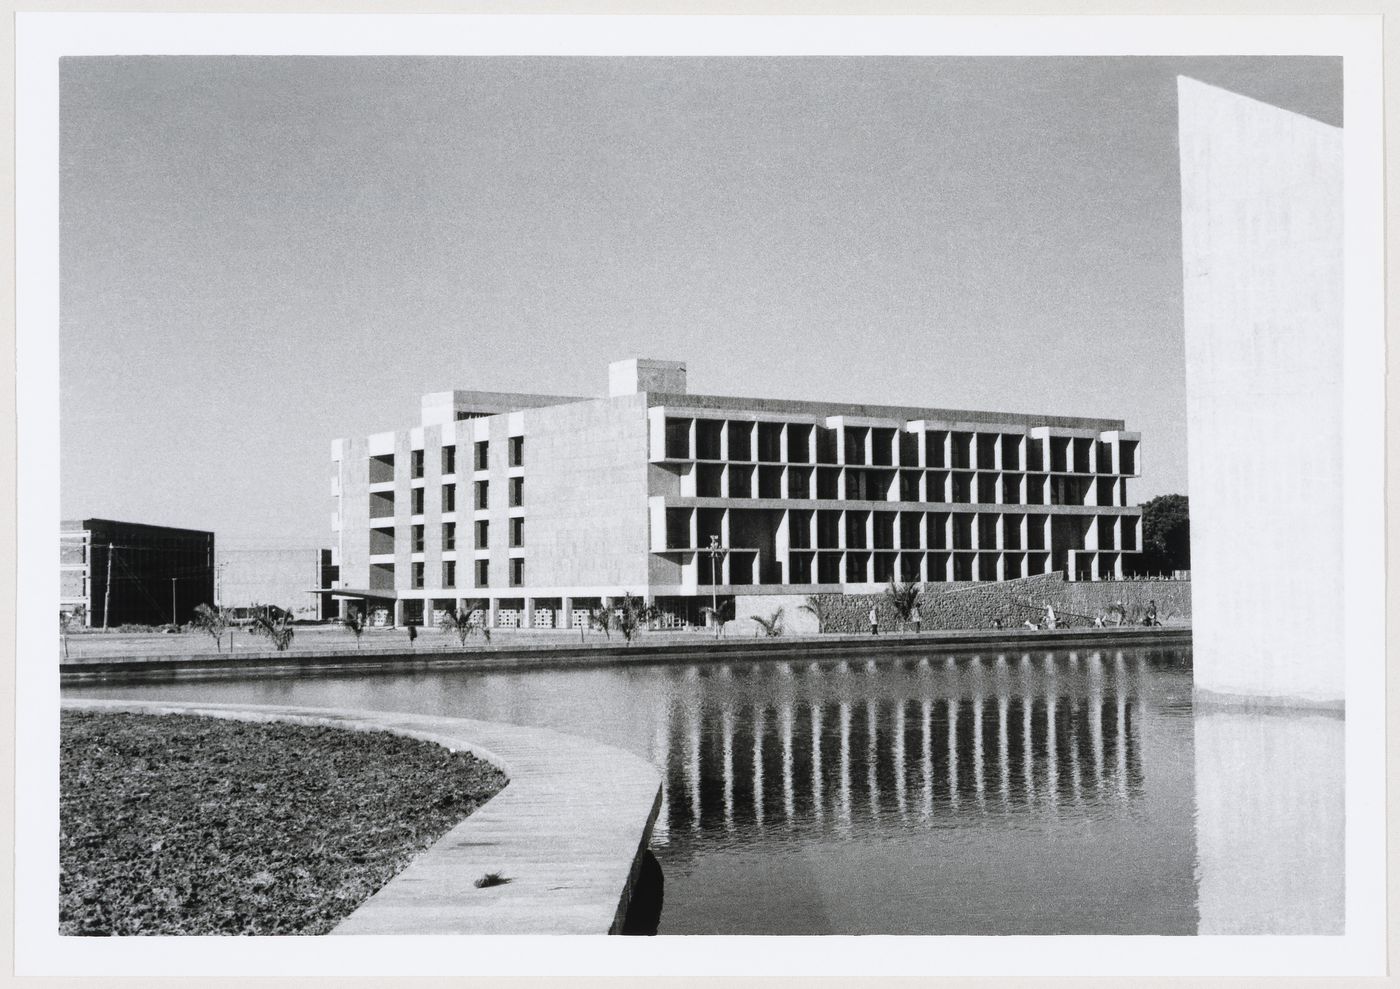 View of University Library seen from Gandhi Bhawan pool, Punjab University, Chandigarh, India